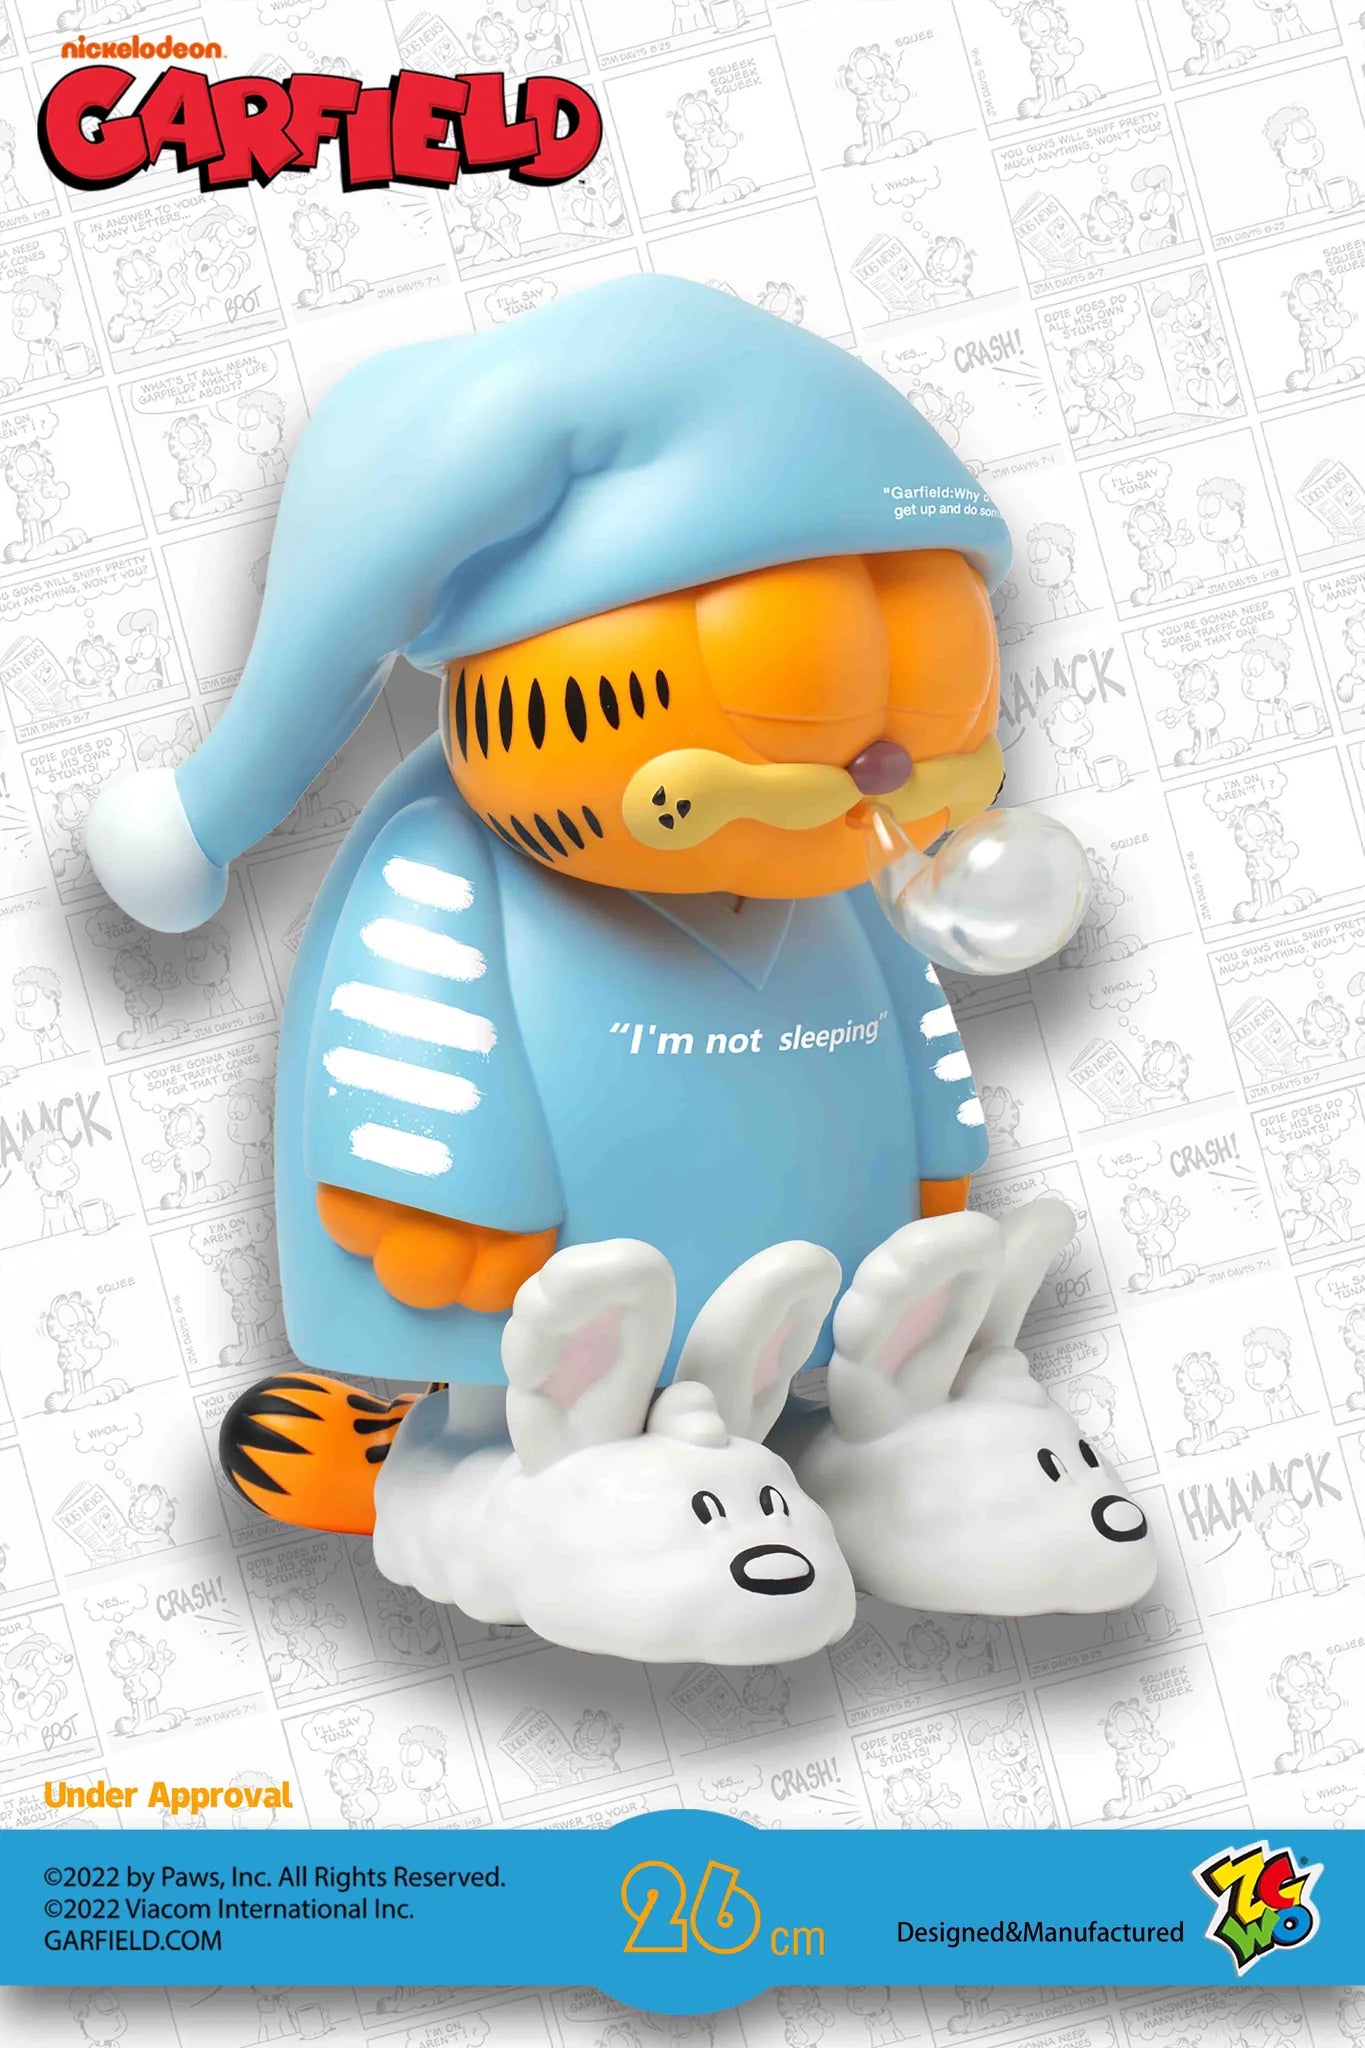 Garfield - "Je ne dors pas" version somnambule 50 cm de Garfield (version bleue)